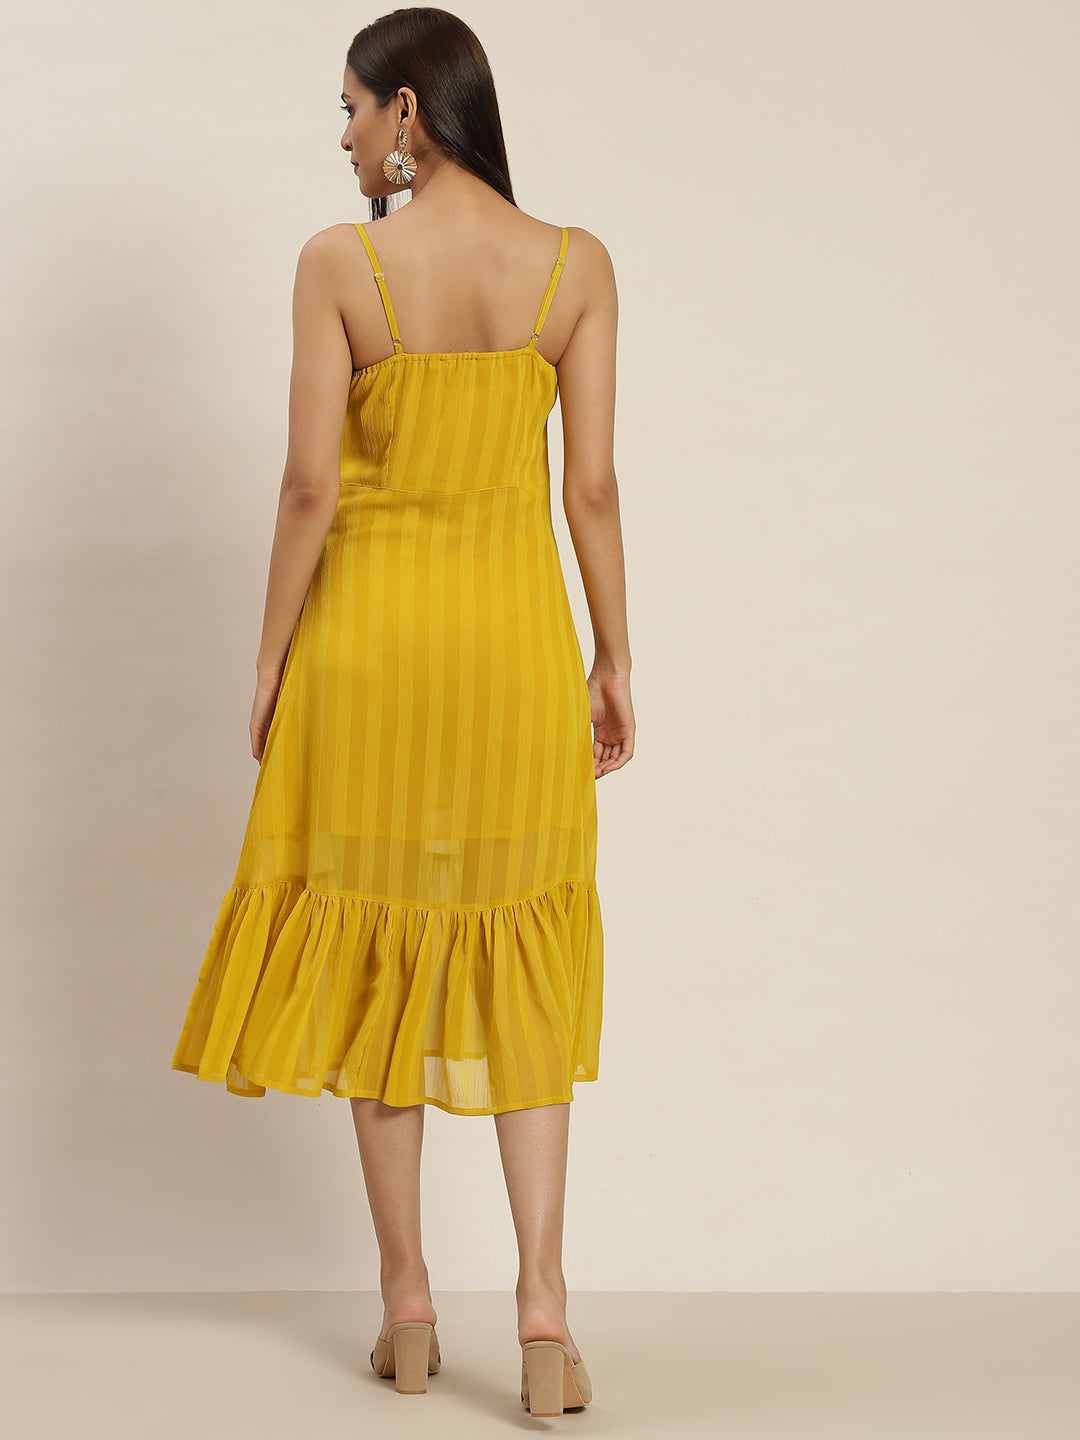 A Yellow Agastya Chiffon Strap Dress With Font Gathers And Flared Hem